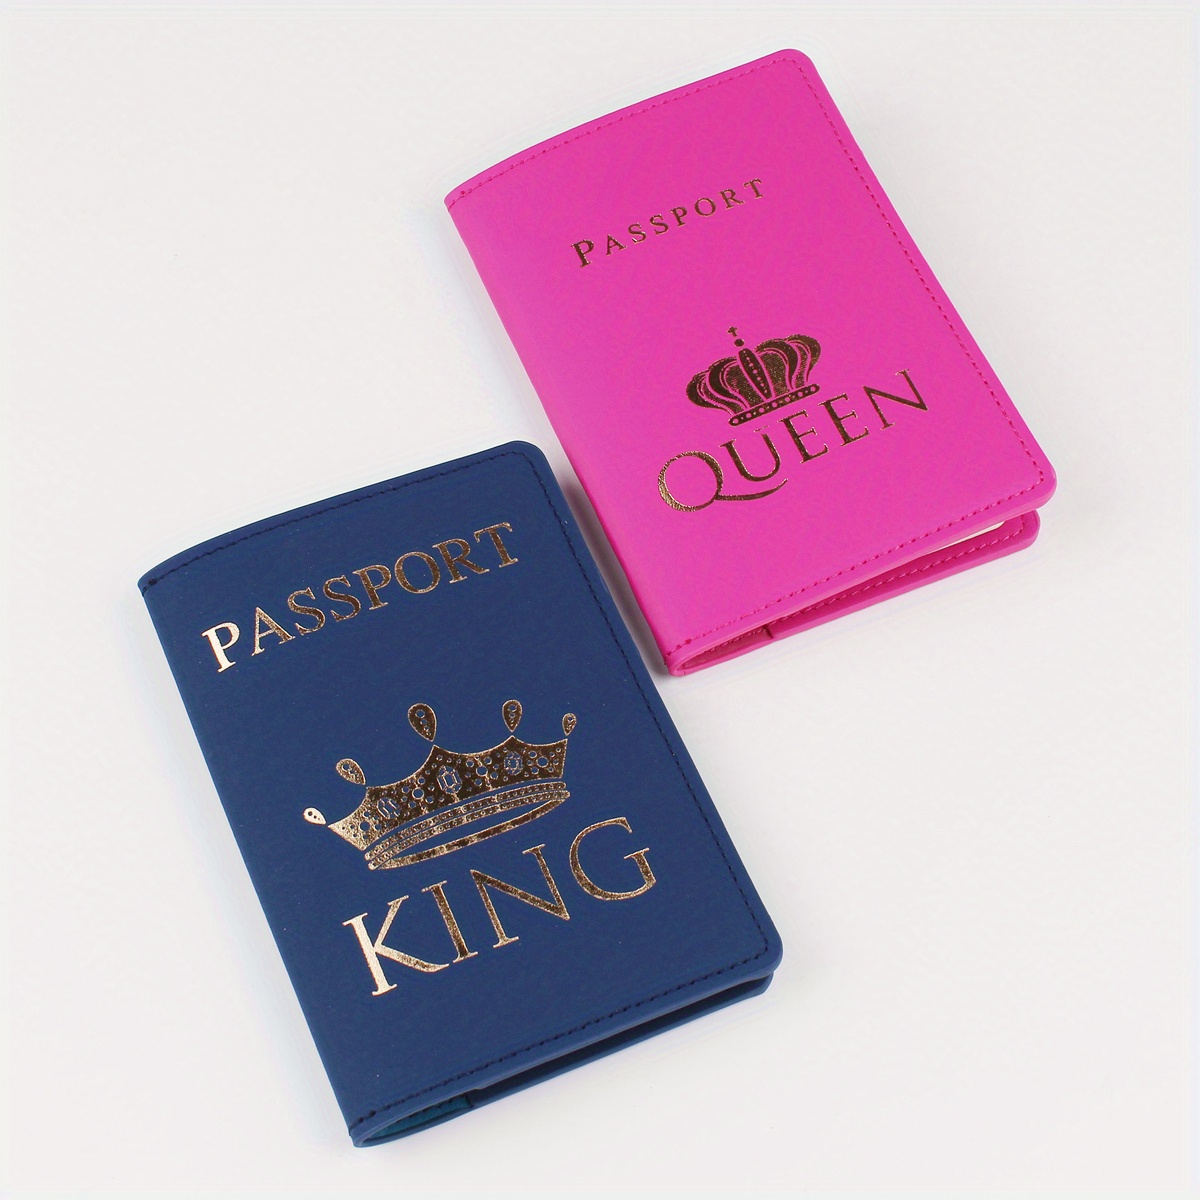 2pcs PU Leather Passport Cover